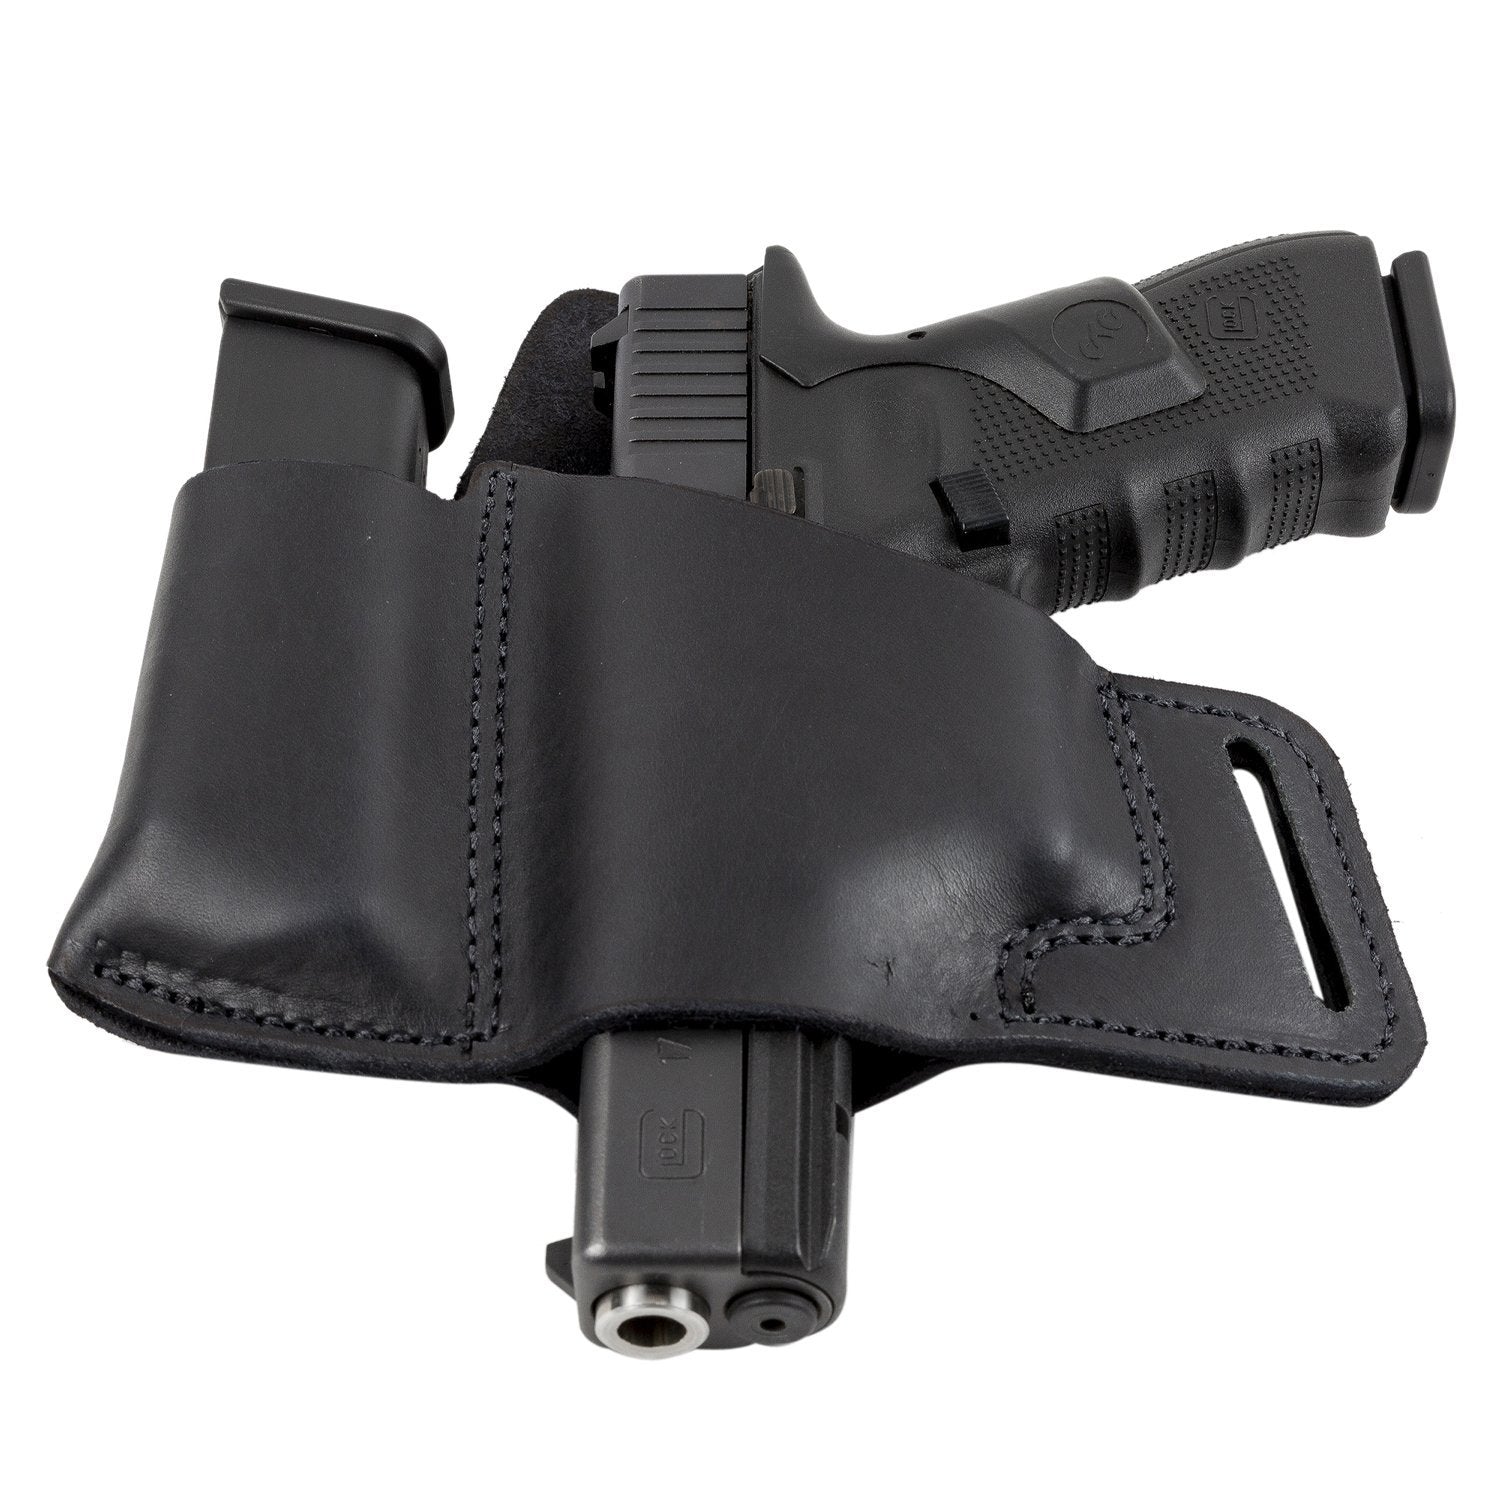 Glock 17 Holster - Made in U.S.A. - Lifetime Warranty